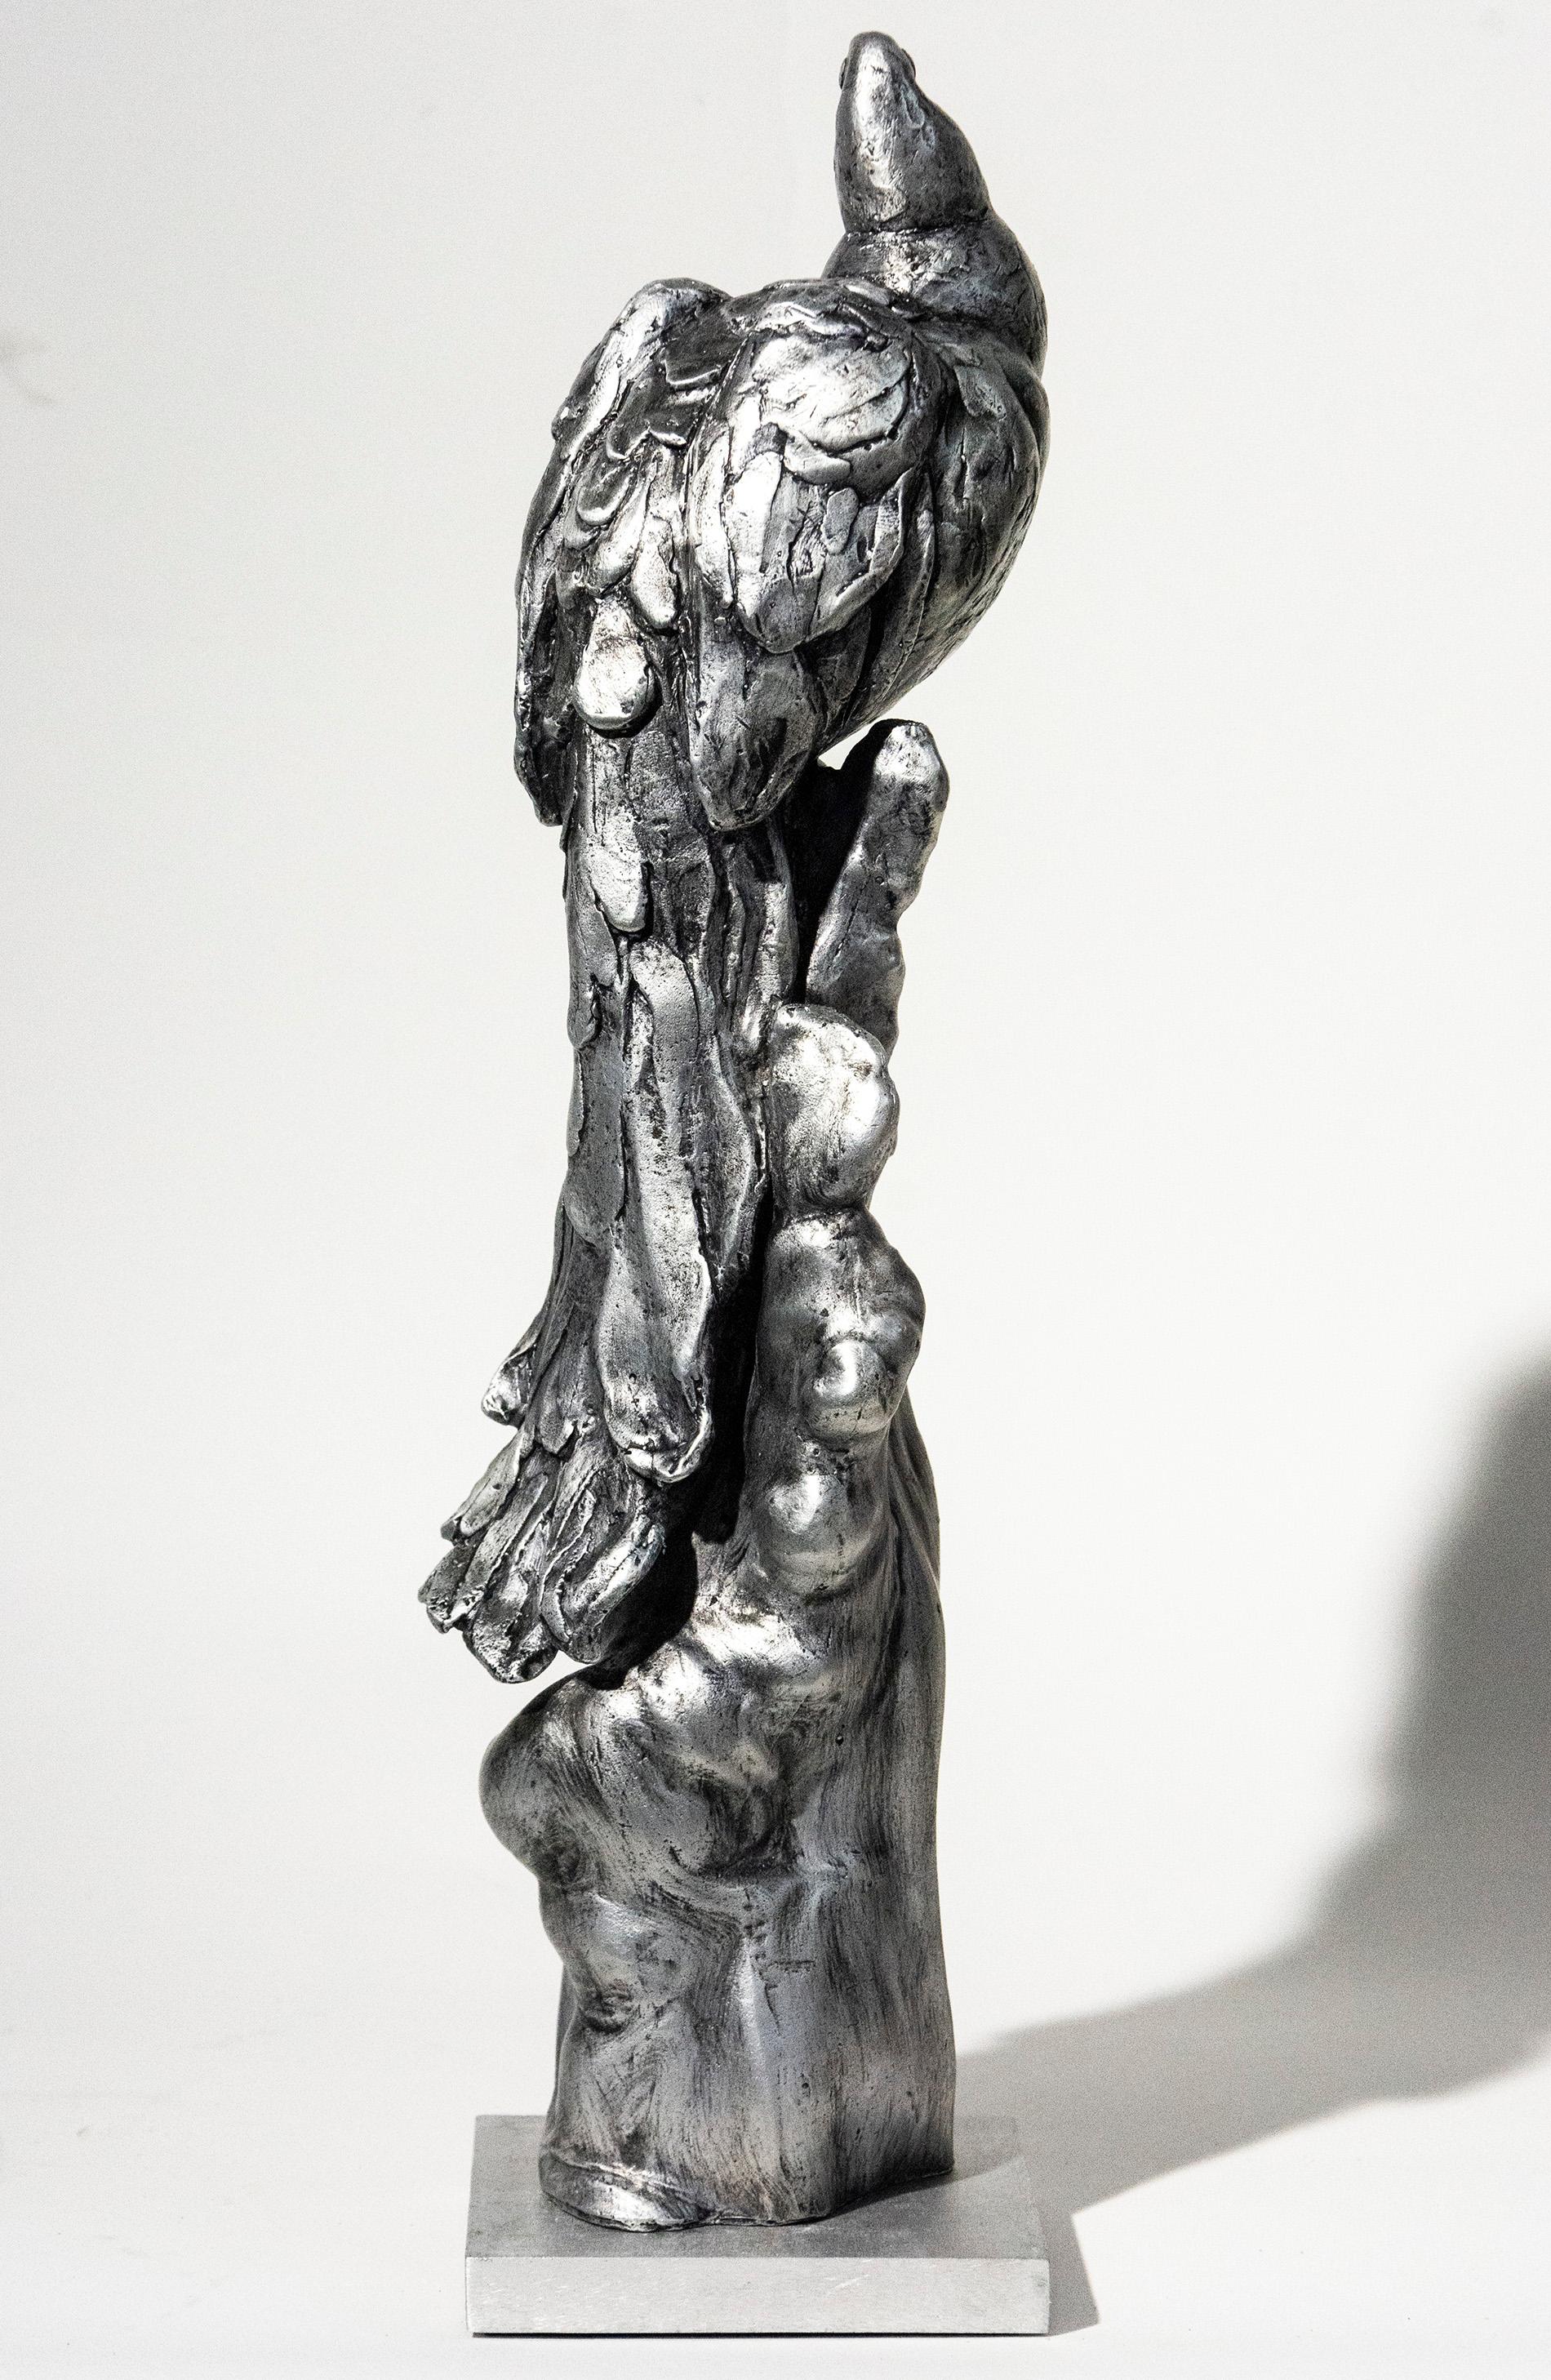 Peacock No 1 - small, cast aluminum, male, bird, interior tabletop sculpture - Sculpture by Nicholas Crombach